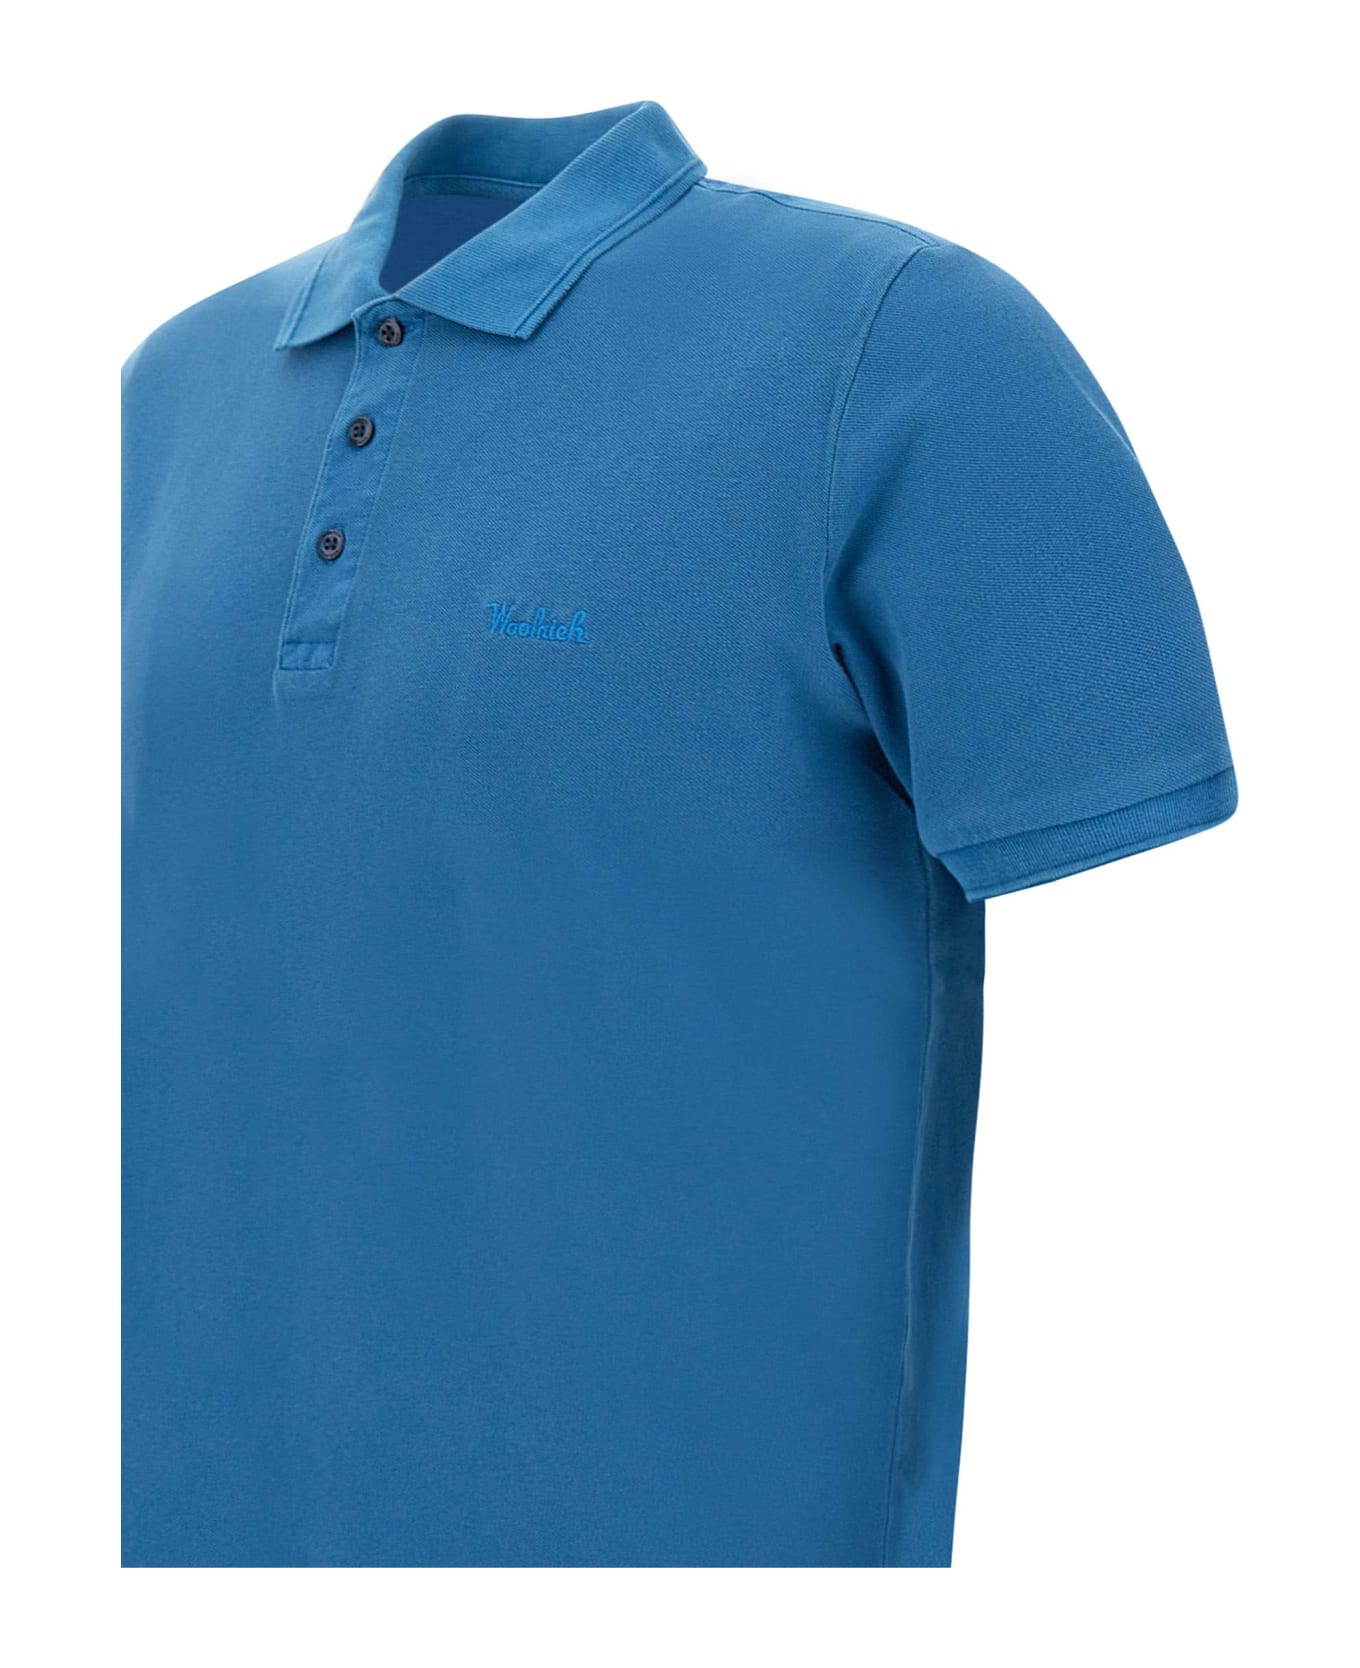 Woolrich 'mackinack' Cotton Piquet Polo Shirt - BLUE